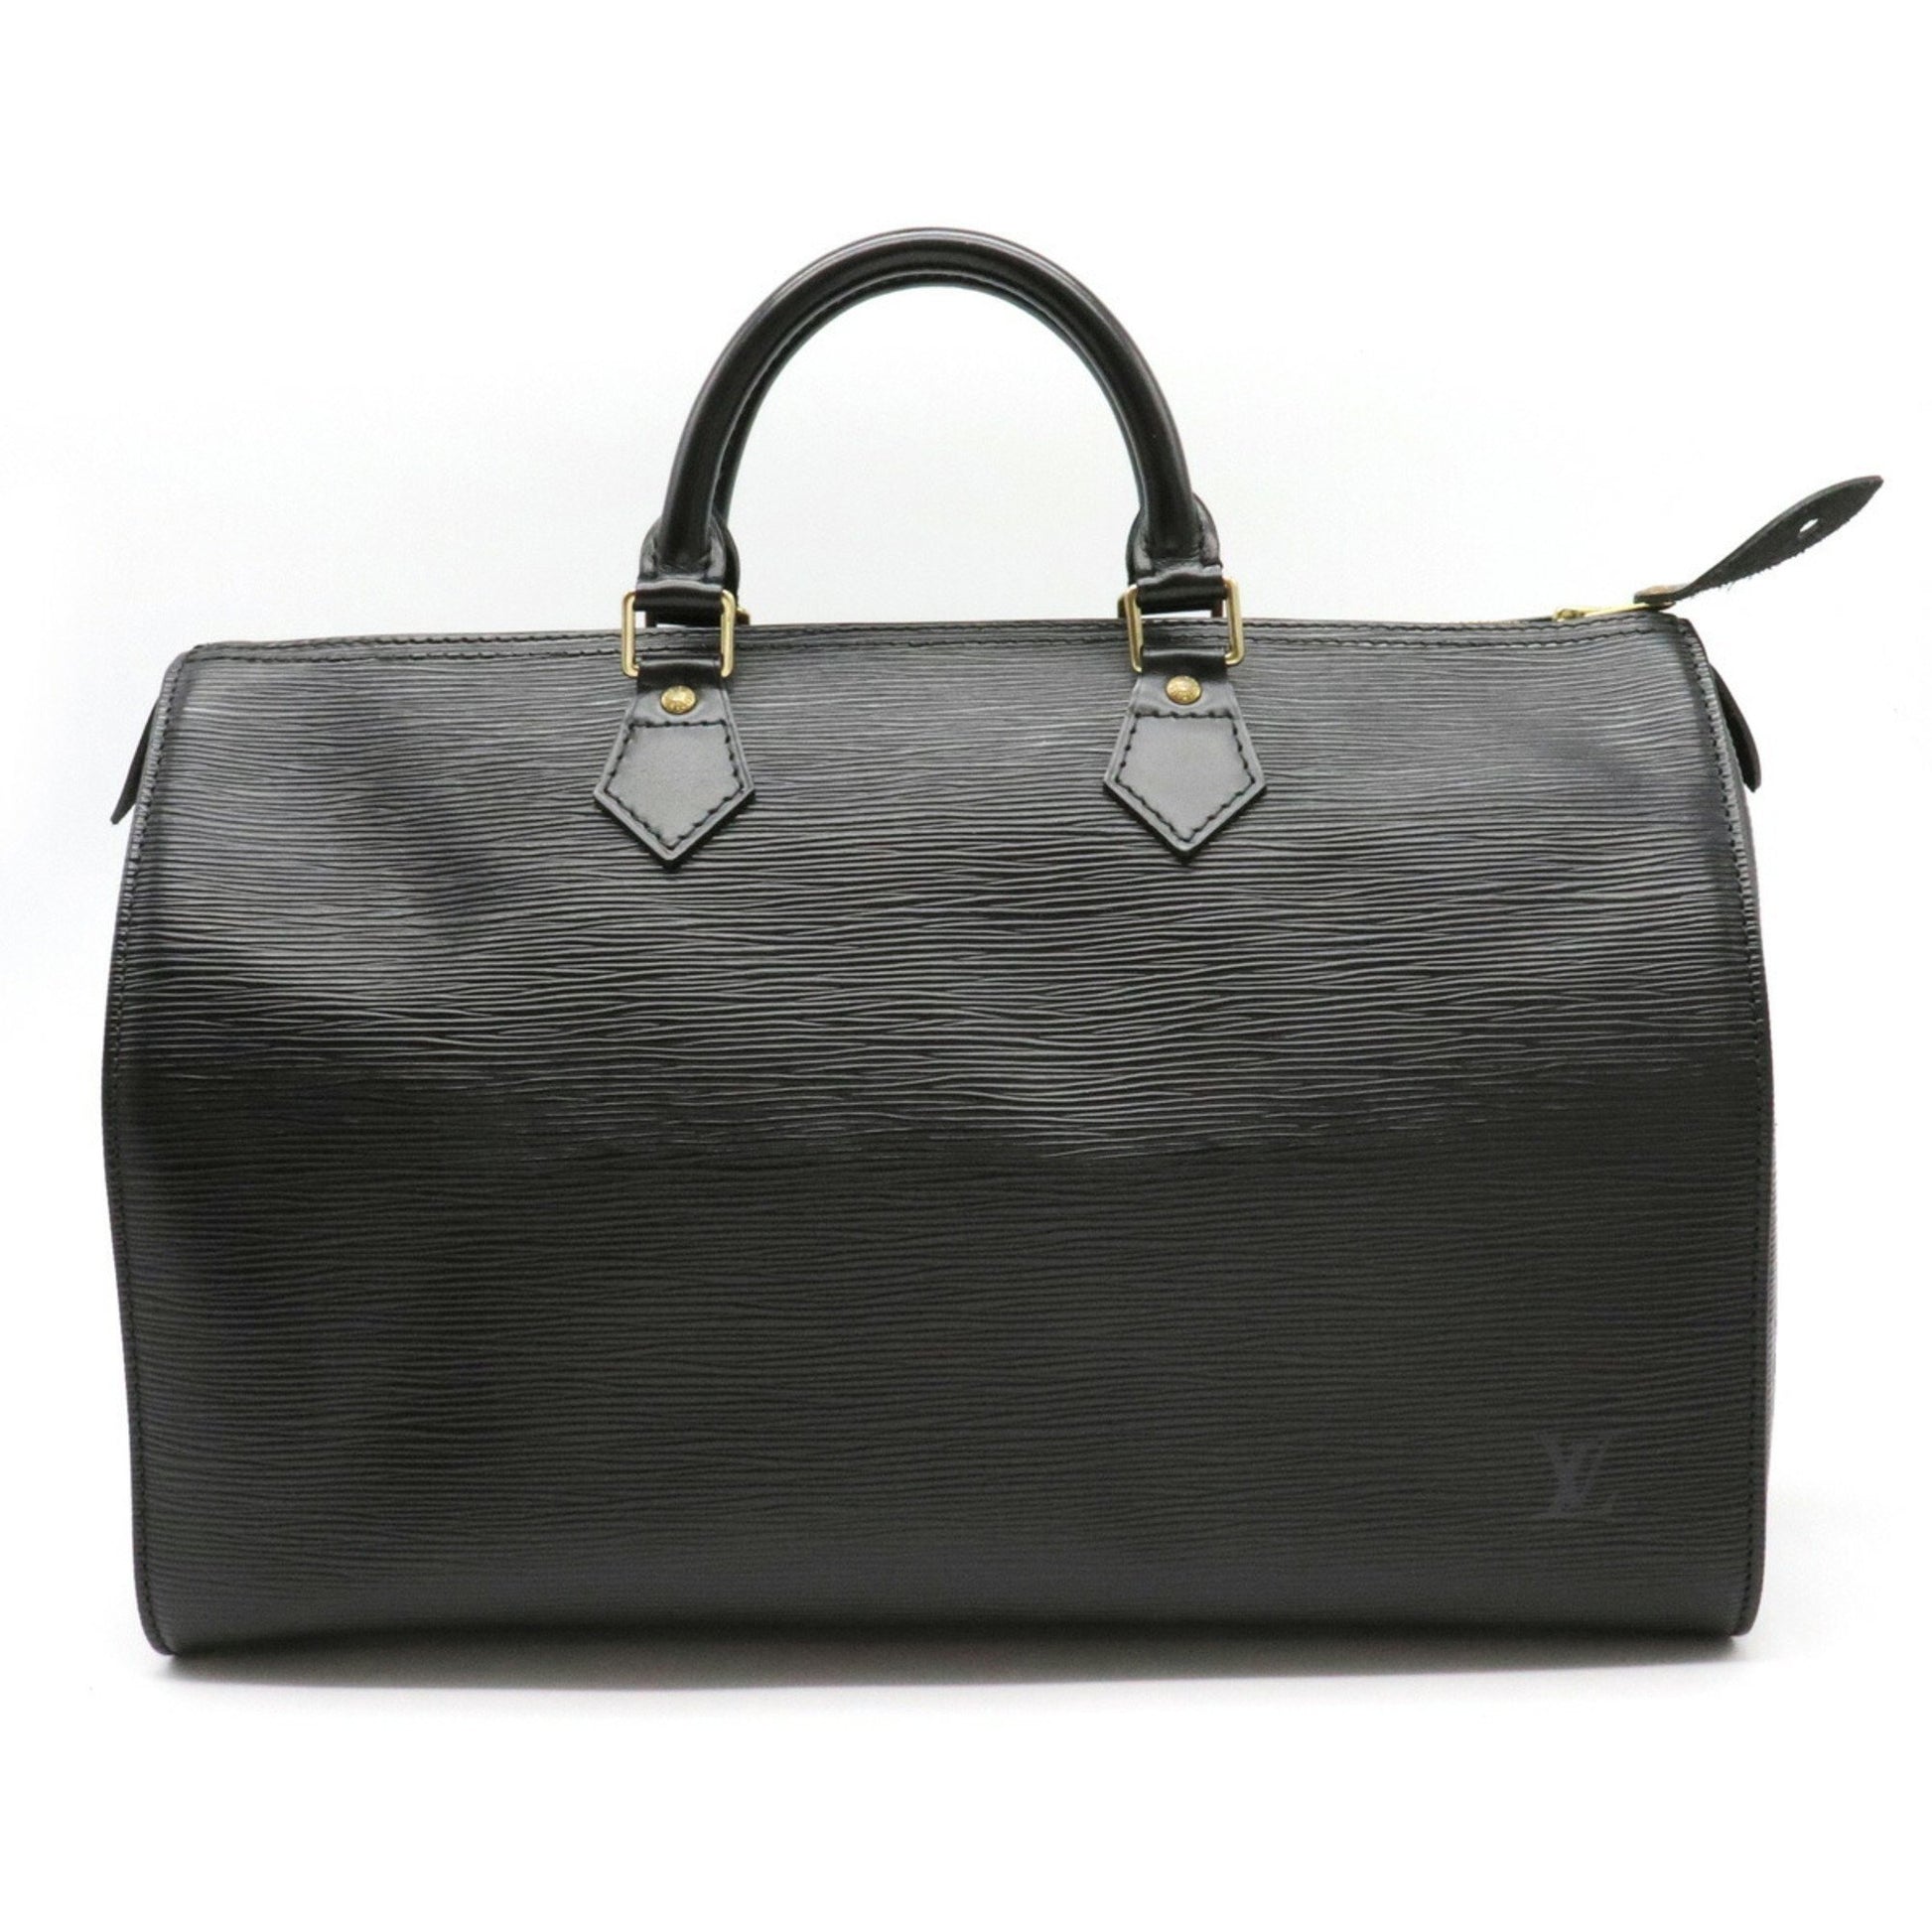 Vuitton Epi Speedy 35 Handbag Boston Bag Leather Noir Black